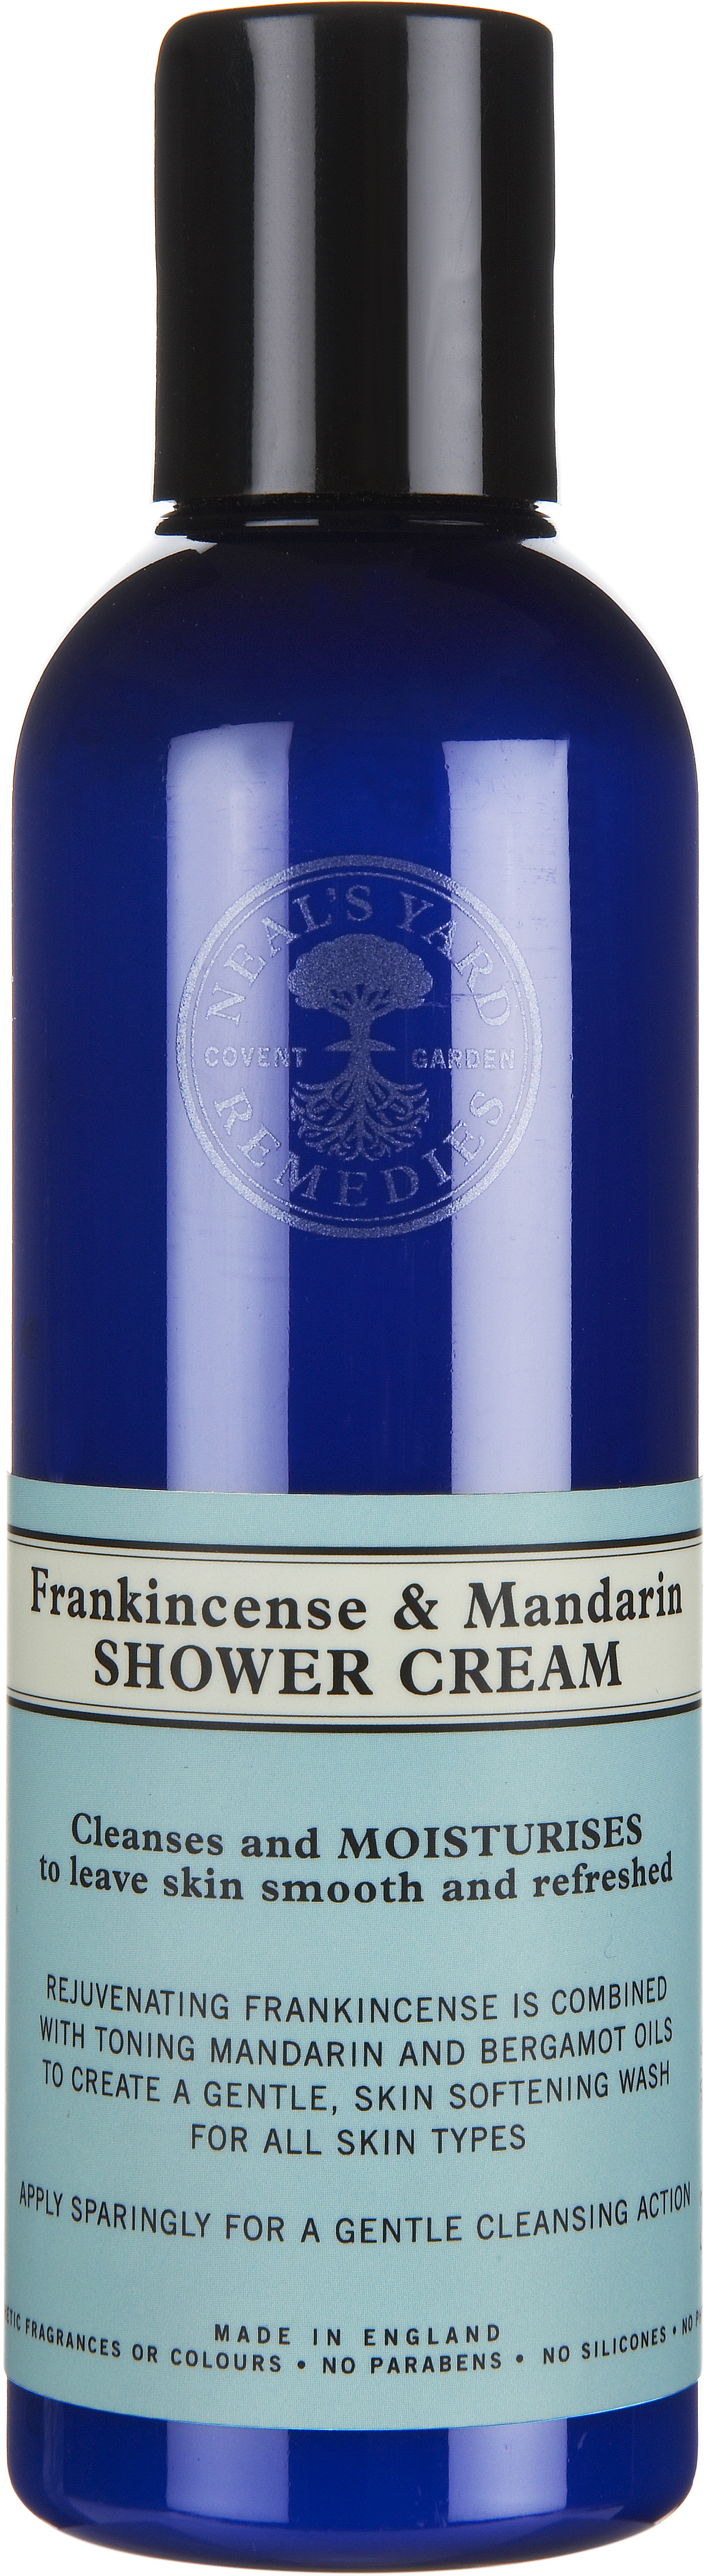 Neal’s Yard Remedies Frankincense & Mandarin Shower Cream 200ml